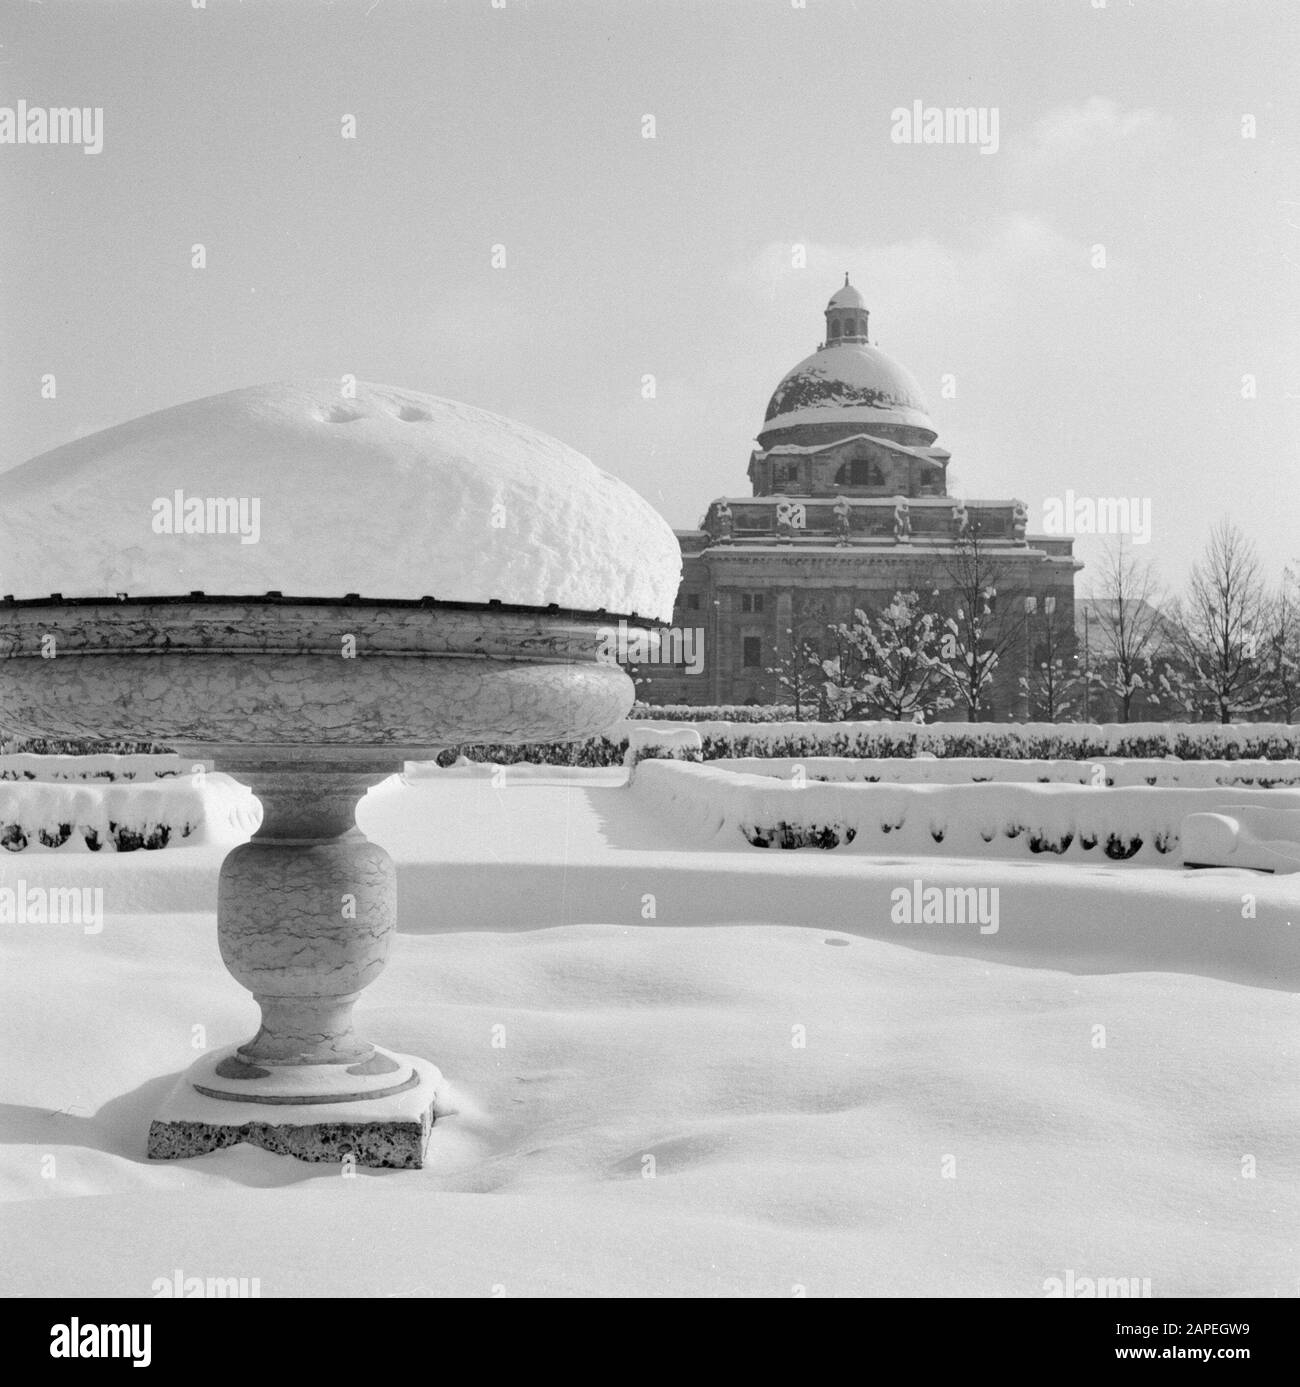 Visit to Munich Description: Snowy Hofgarten with the Bayerische Staatskanzlei Date: December 1, 1958 Location: Bavaria, Germany, Munich, West Germany Keywords: parks, parliament buildings, snow, winter Stock Photo